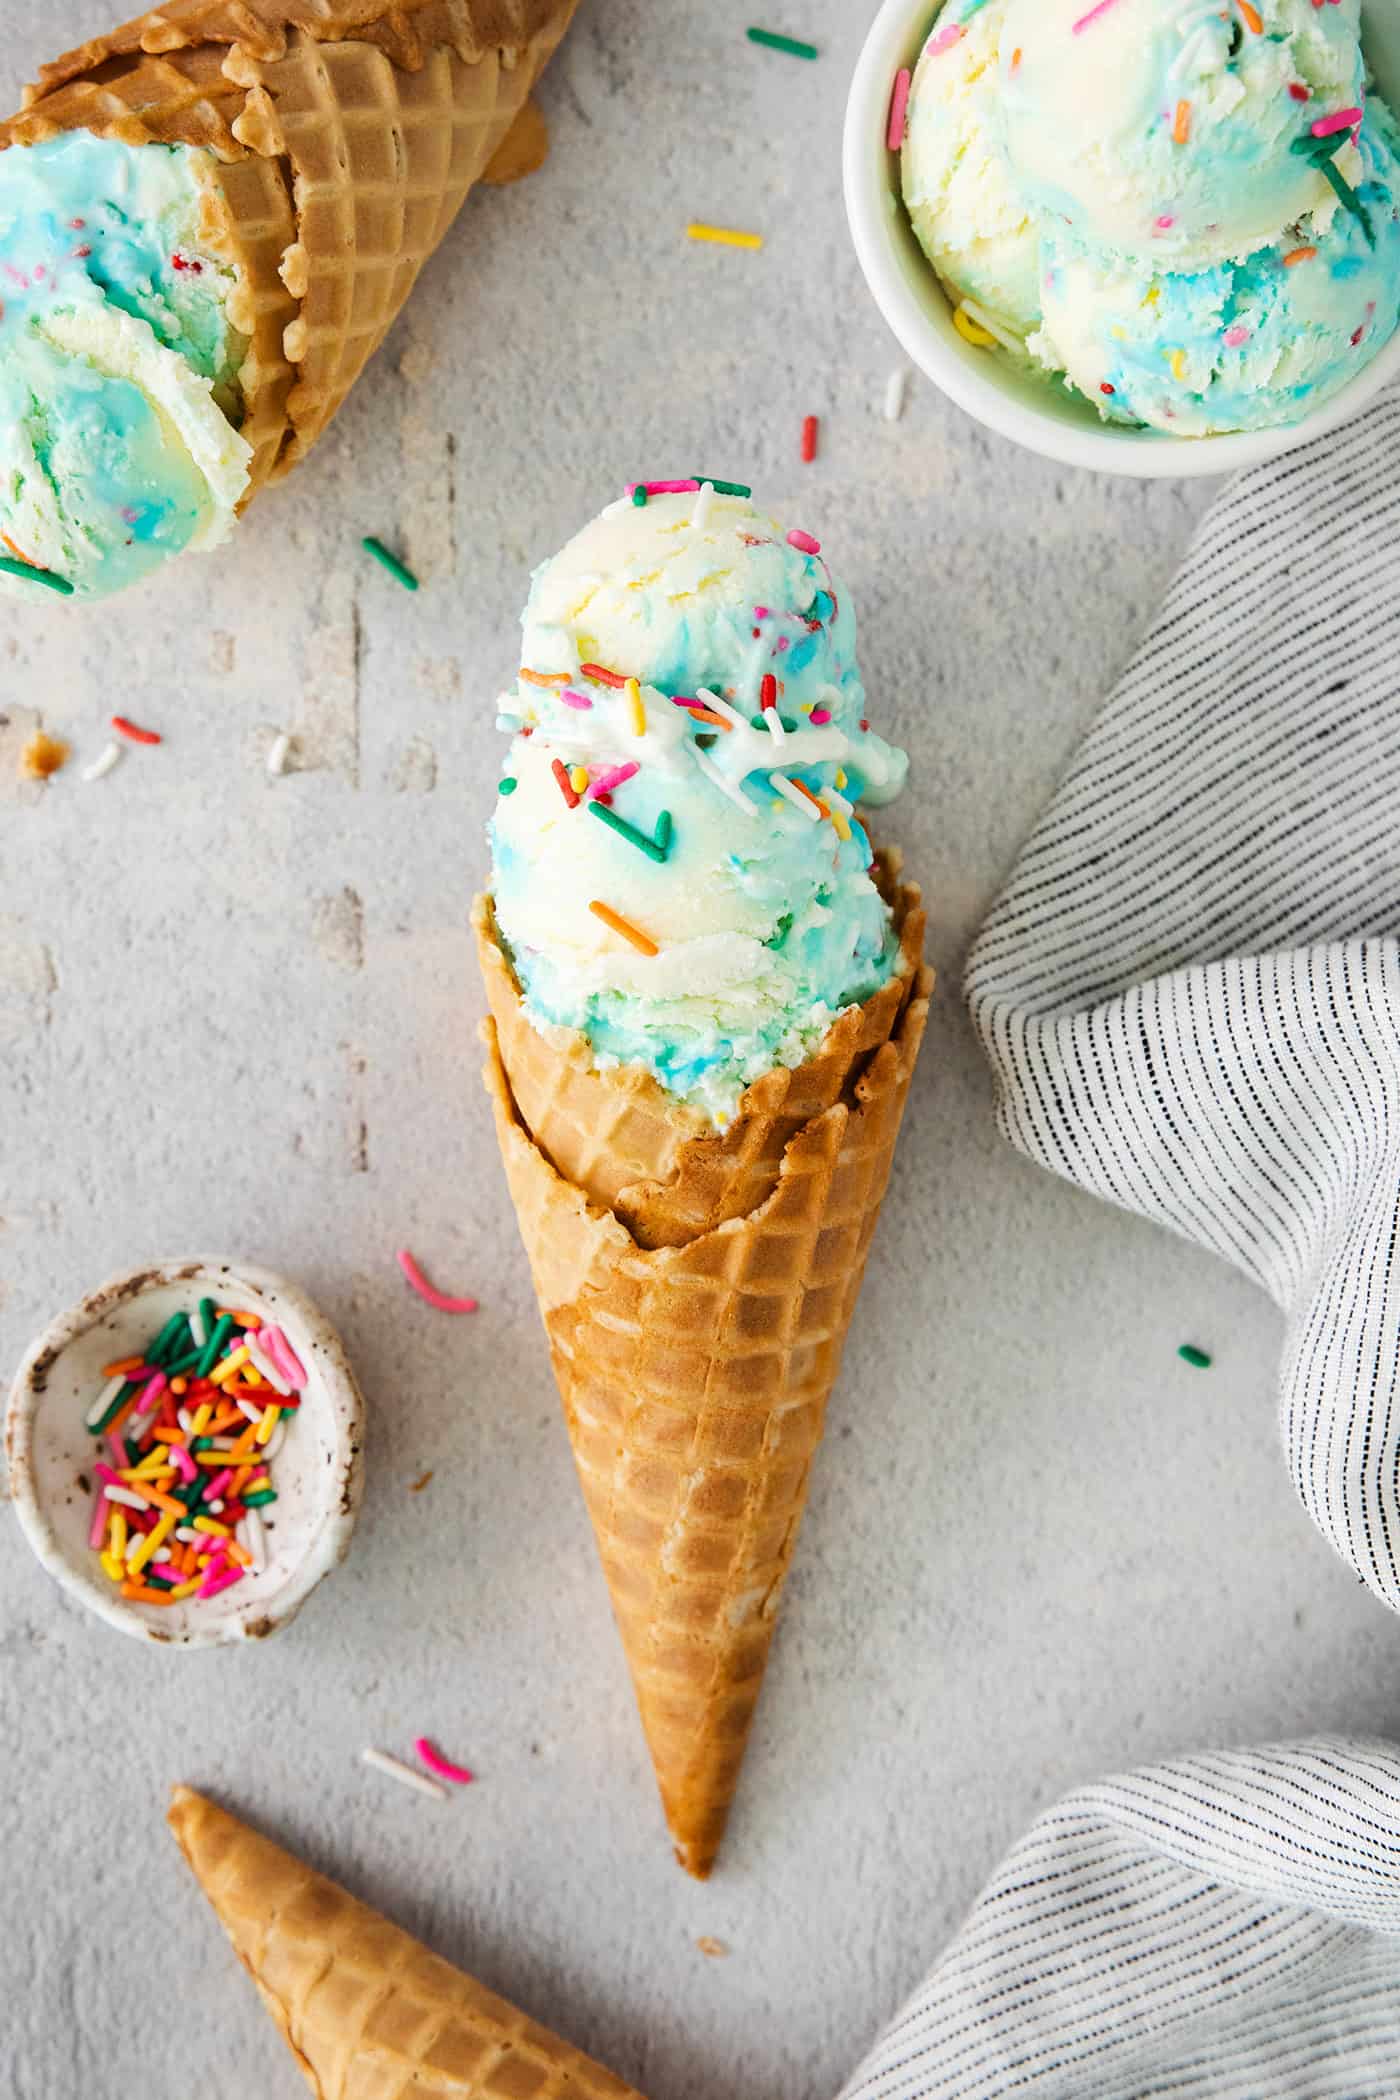 Birthday cake ice cream cones with rainbow sprinkles alongside.